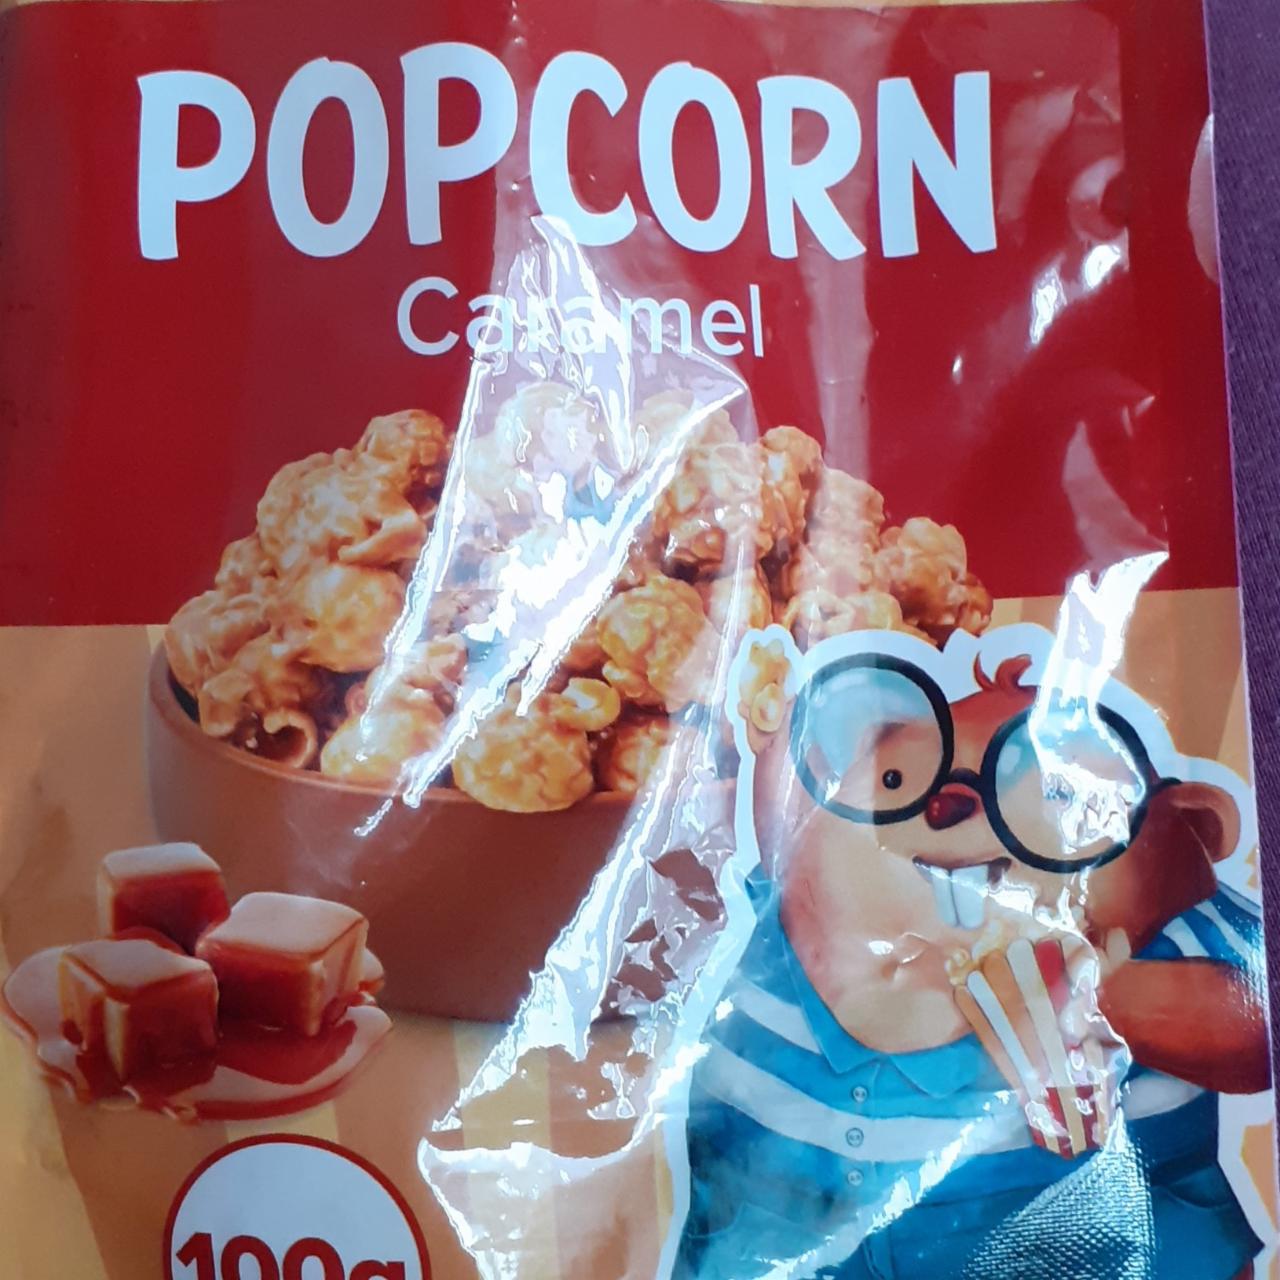 Fotografie - Popcorn Caramel Dizzi